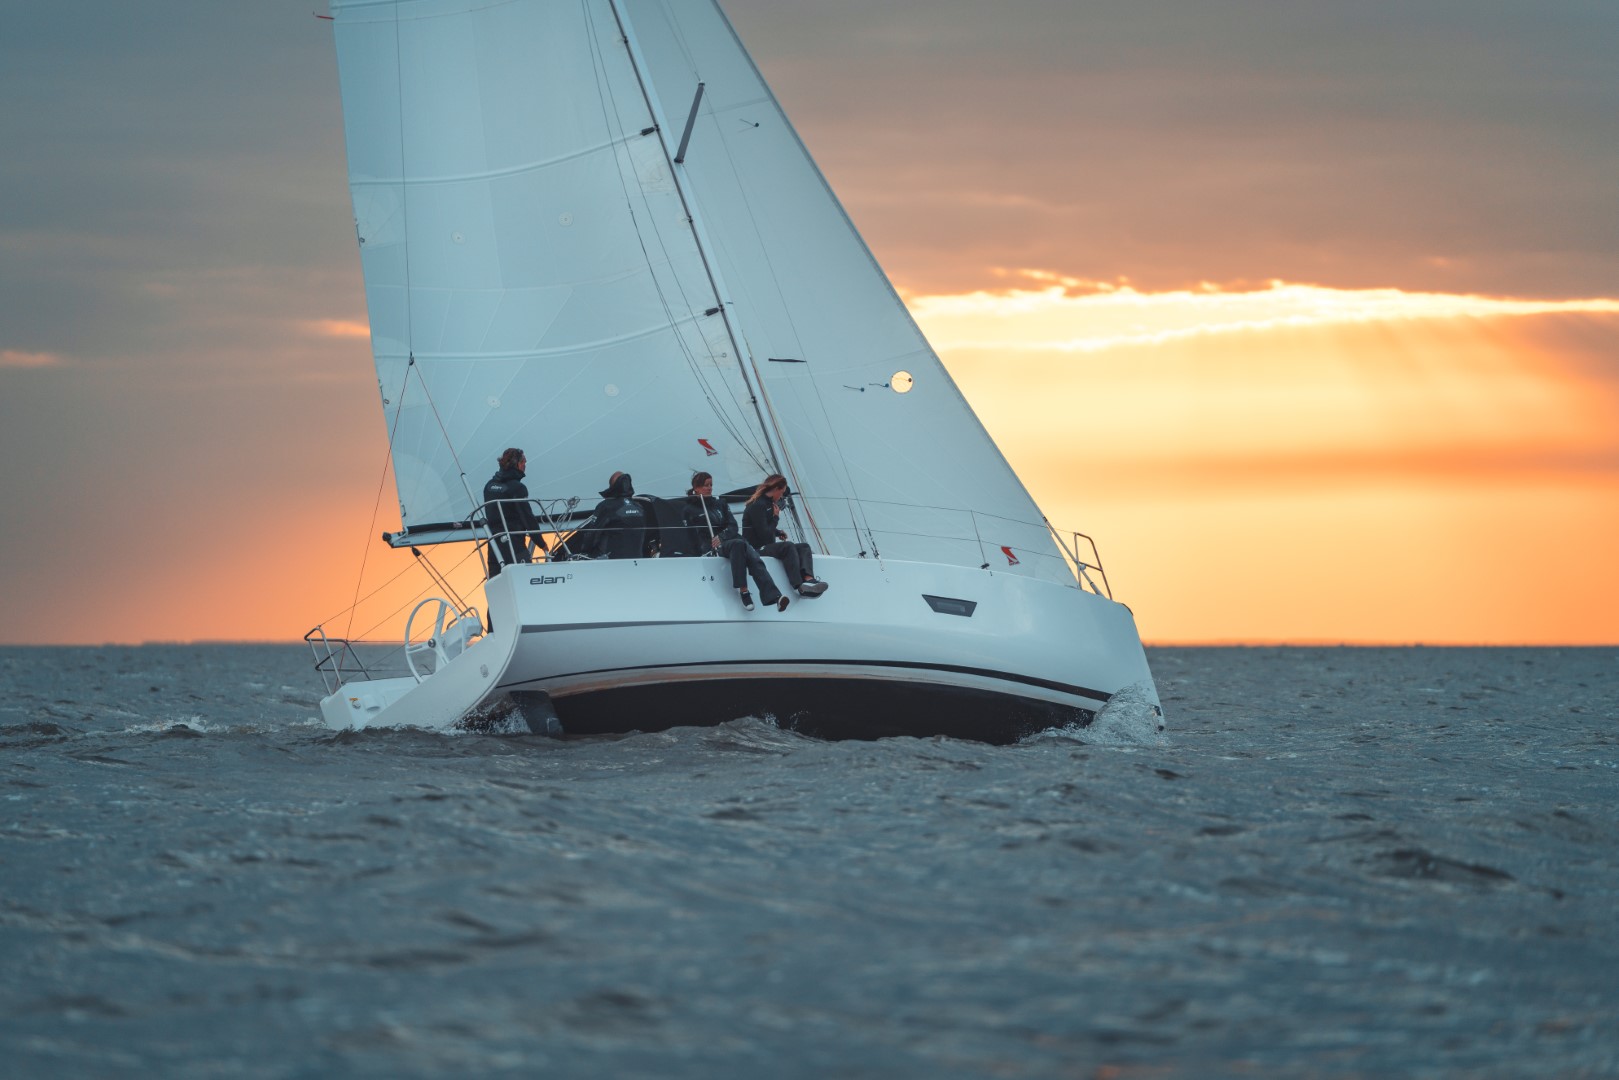 elan-yachts-e3-performance-cruiser-sailboat-sailing-at-sunset-heeled